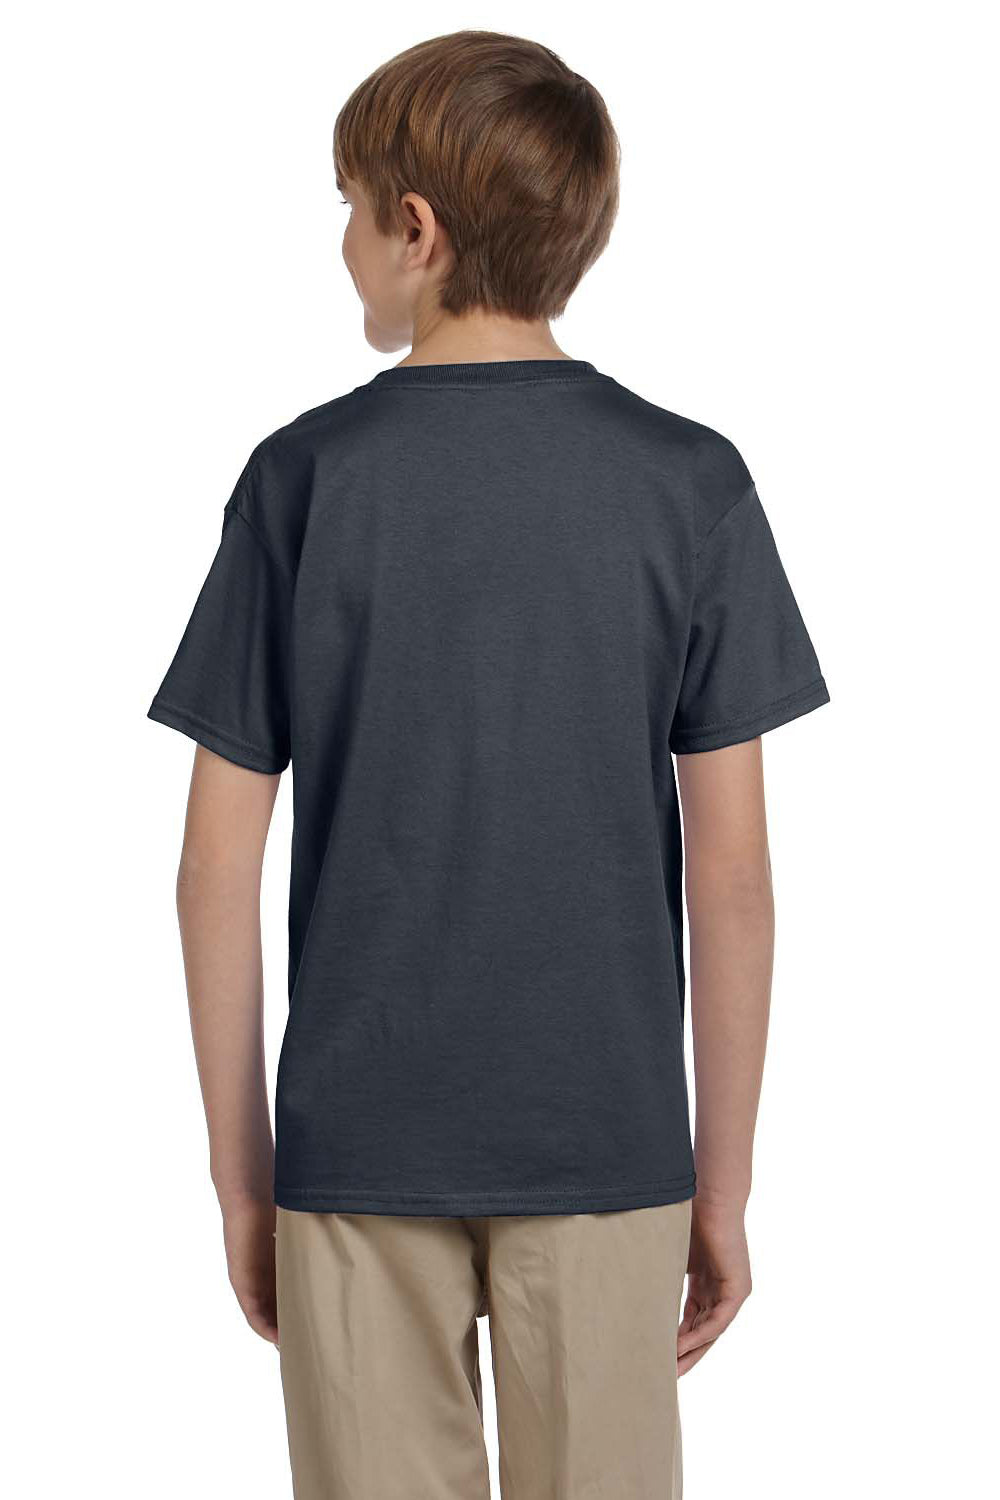 Gildan G200B Youth Ultra Short Sleeve Crewneck T-Shirt Charcoal Grey Back